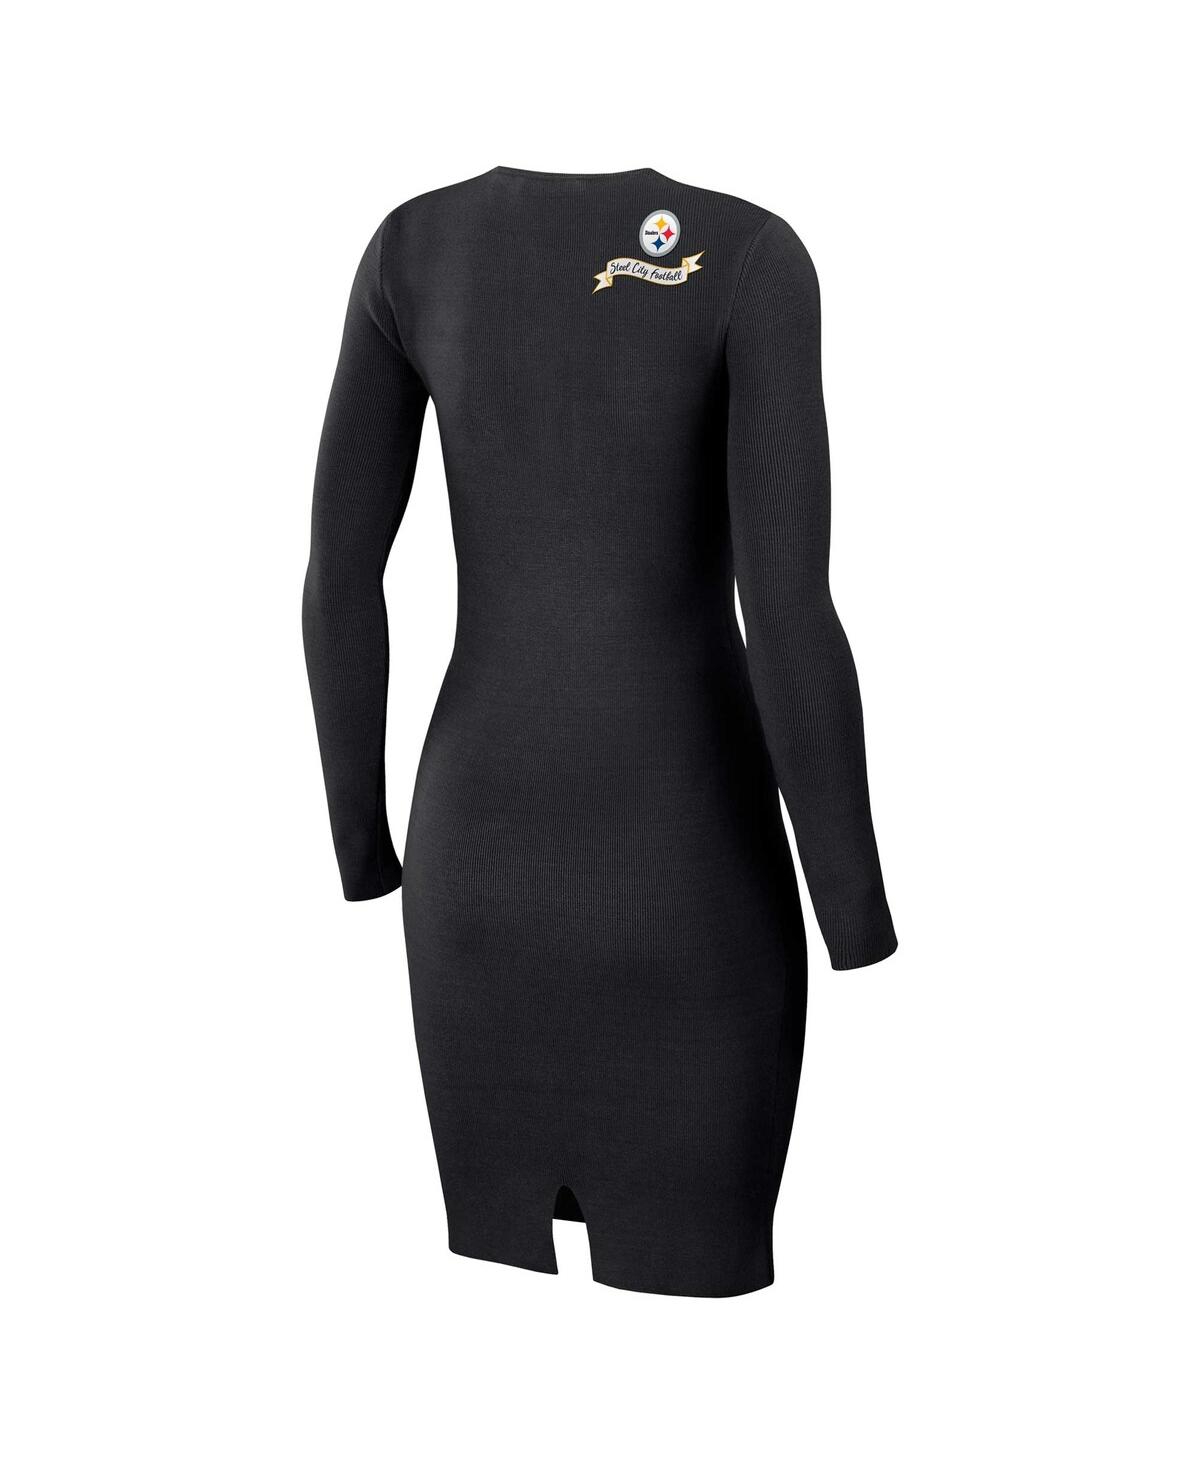 Shop Wear By Erin Andrews Women's  Black Pittsburgh Steelers Lace Up Long Sleeve Dress